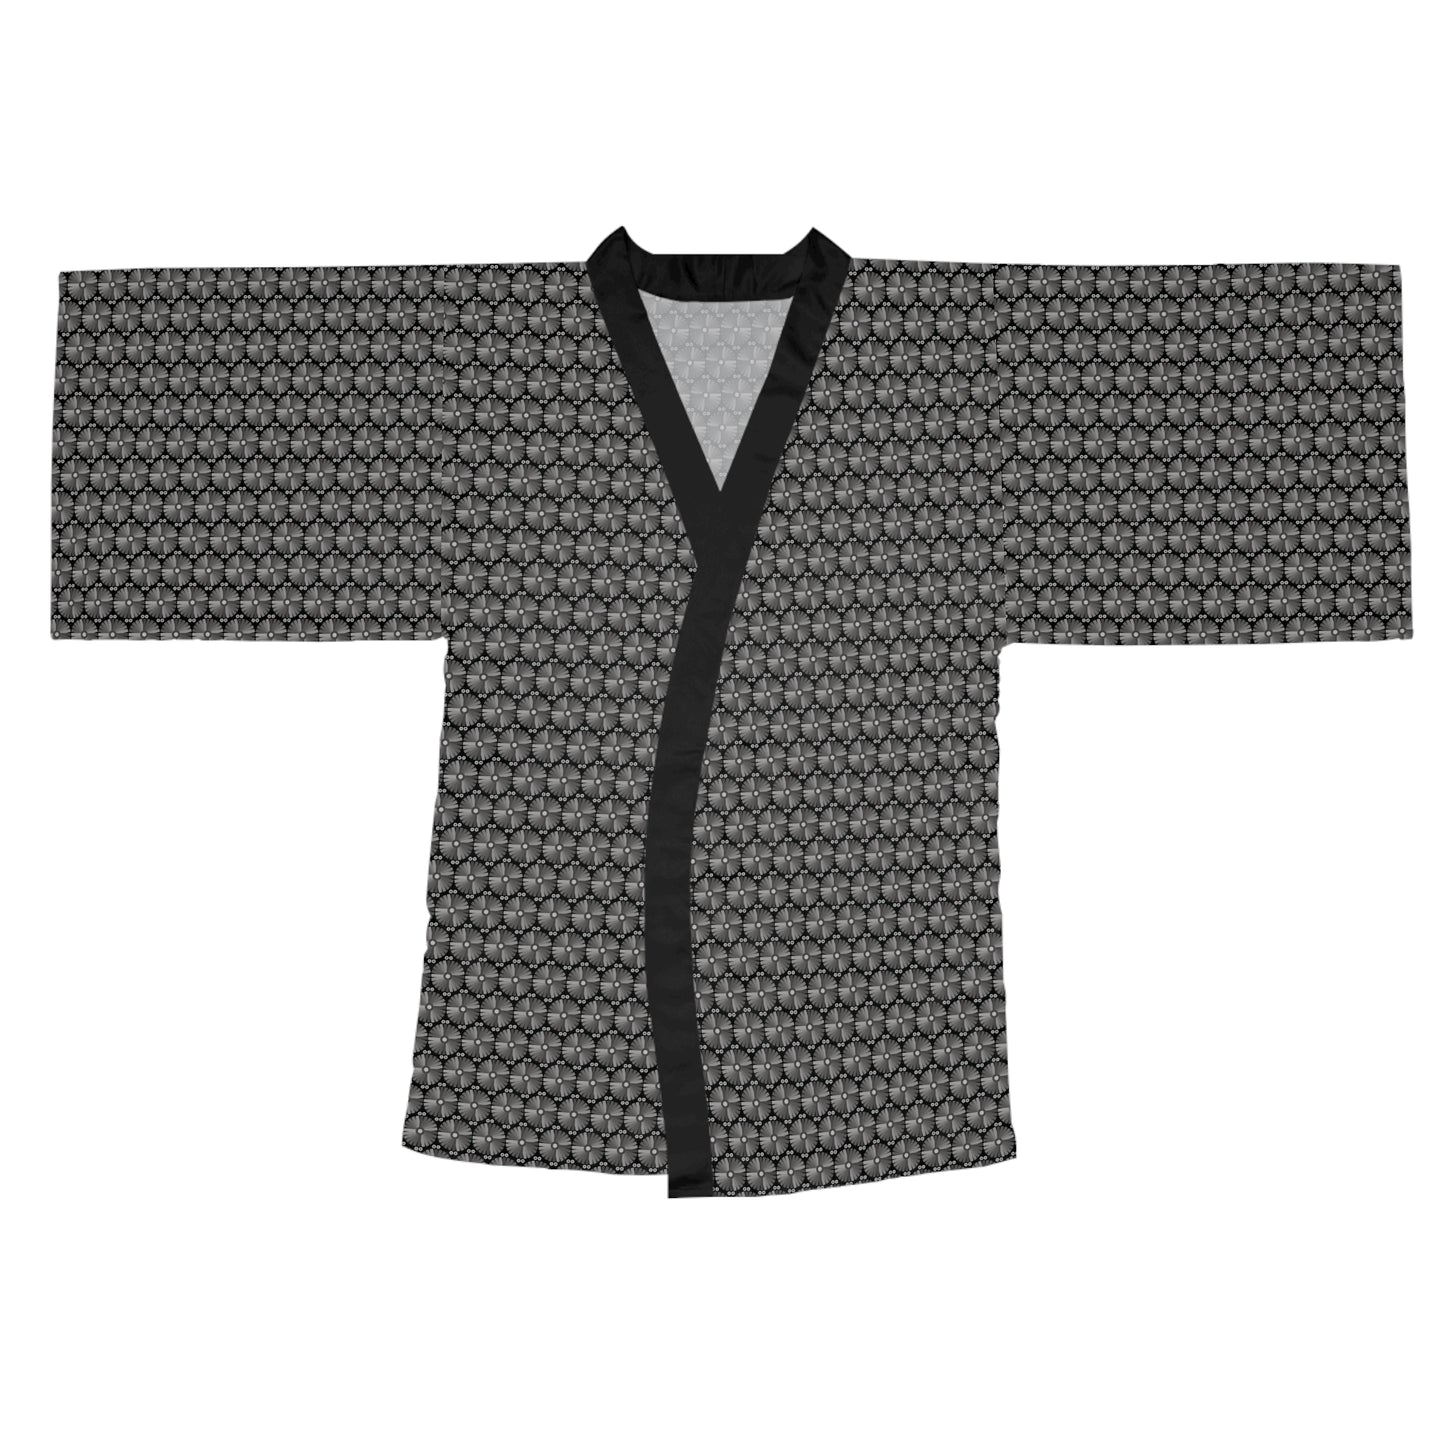 Letter Art - I - Gray - Black 000000 - Long Sleeve Kimono Robe (AOP)